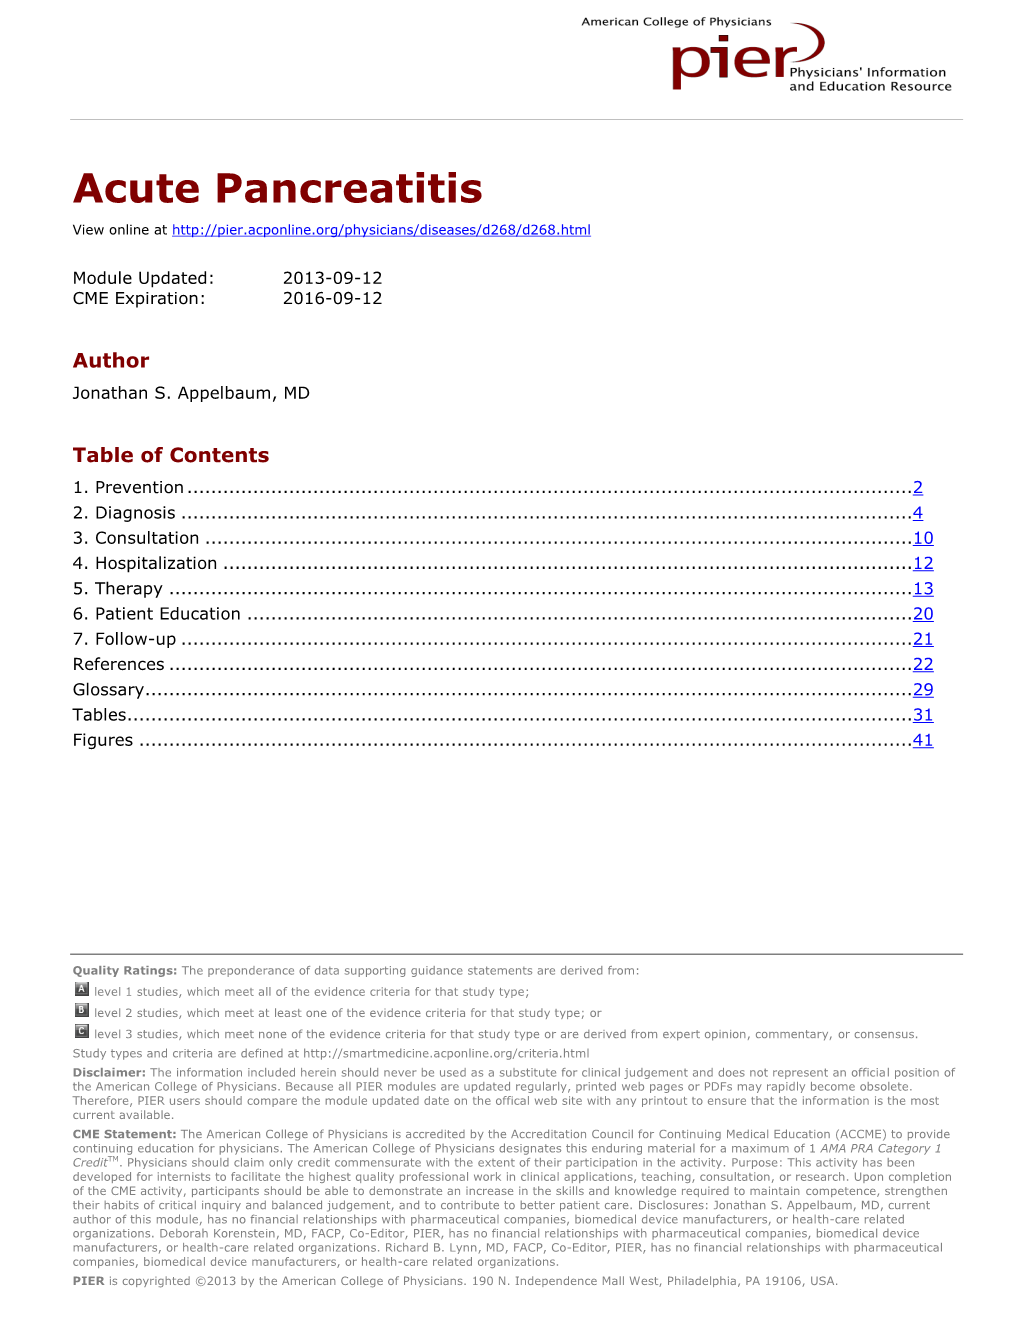 Acute Pancreatitis View Online At